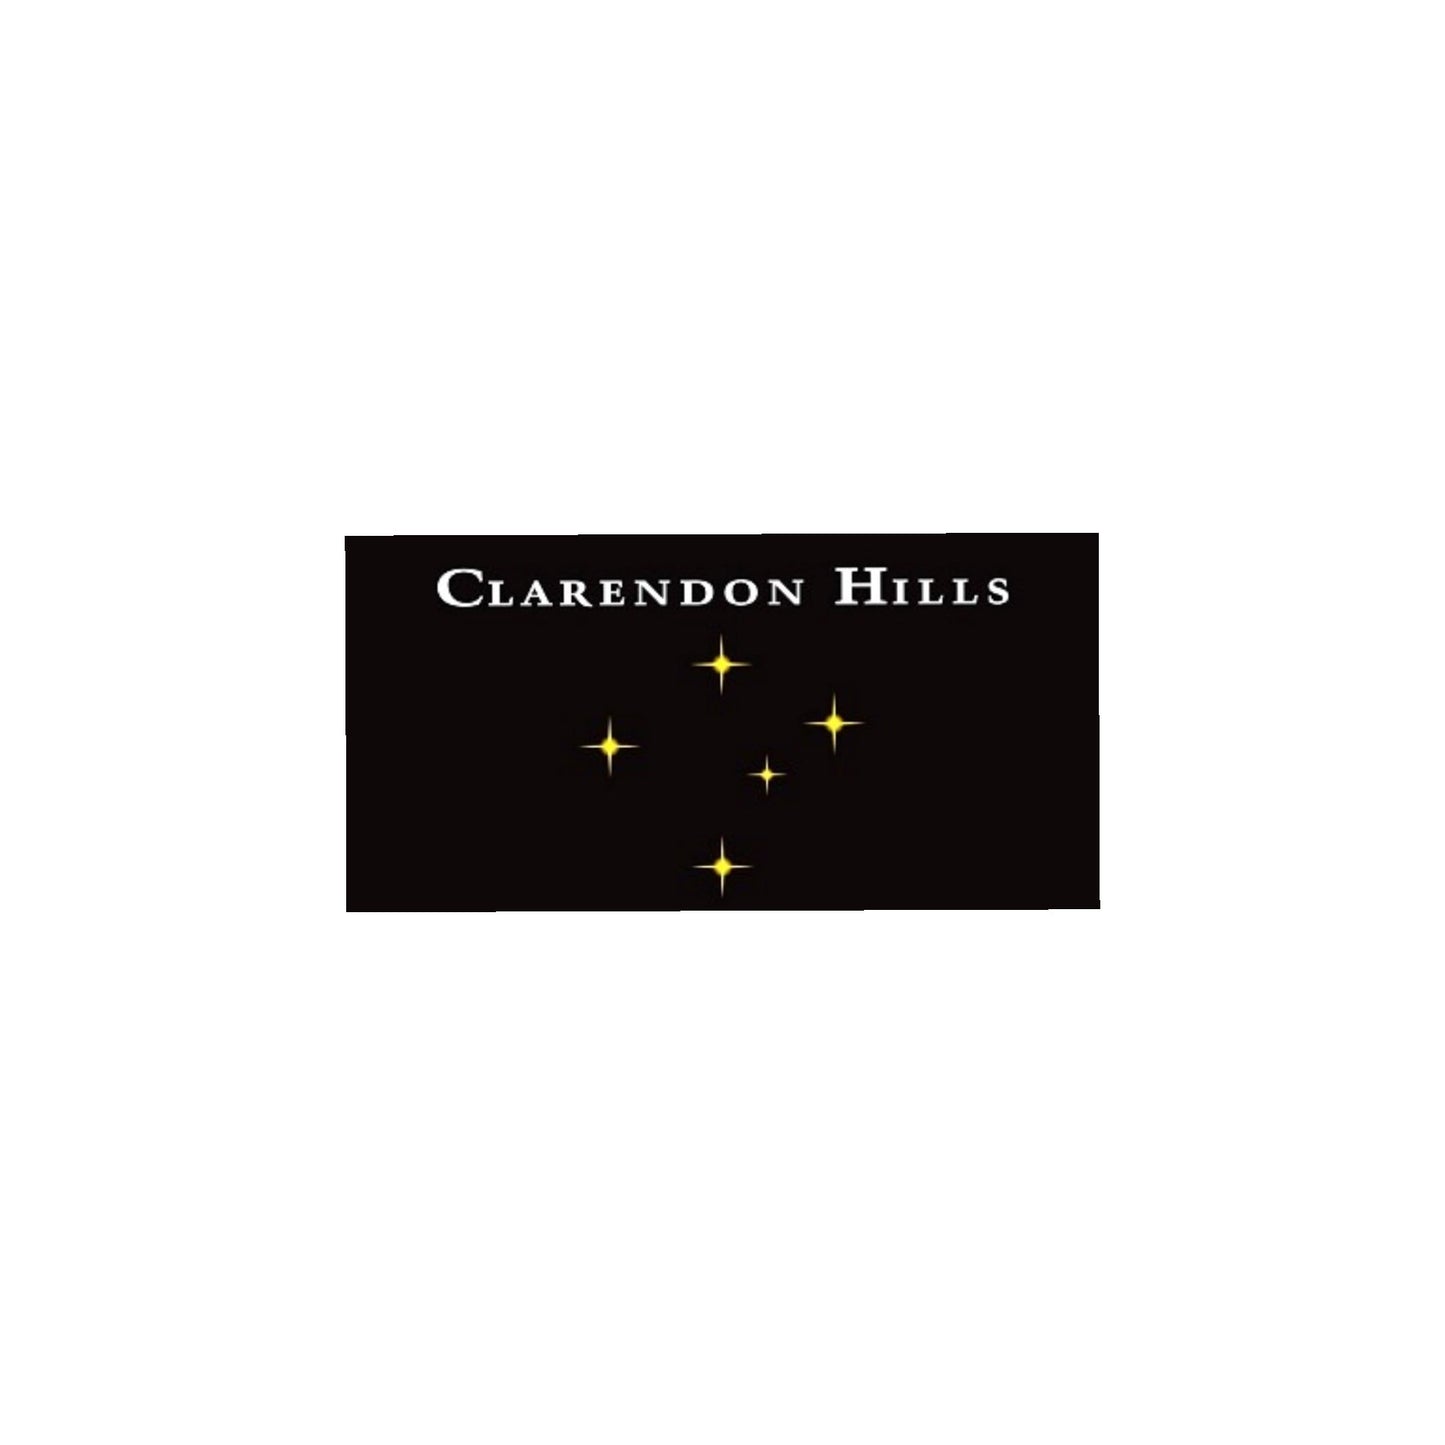 2007 Clarendon Hills, Astralis 750ml - OWC6